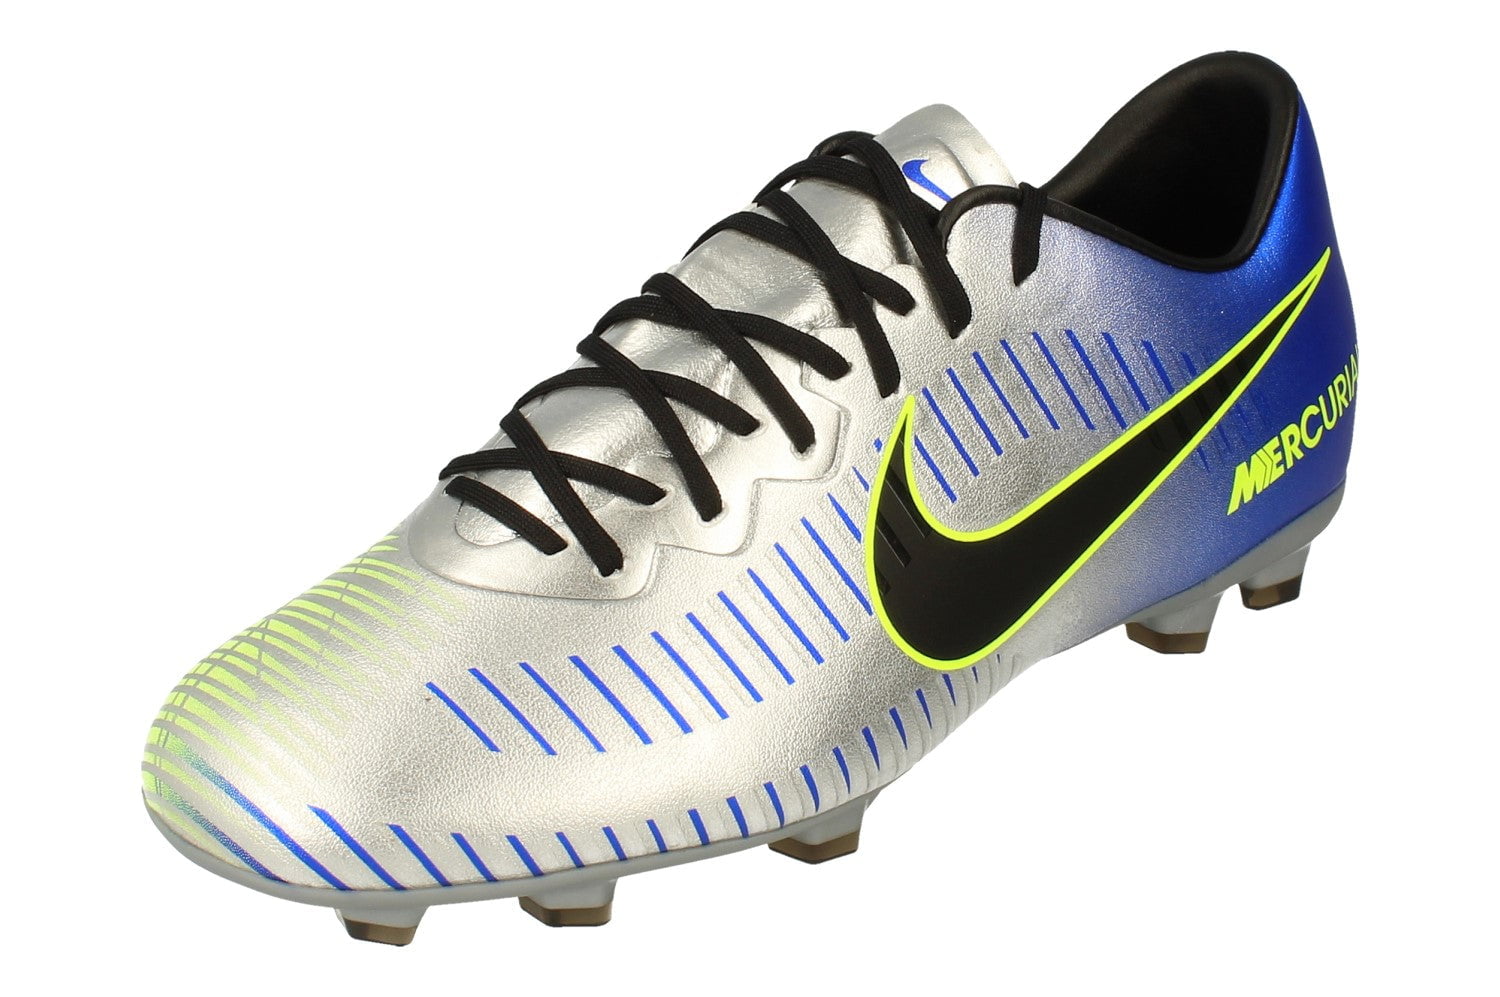 Nike Mercurial Vapor Xi FG Football Boots 940855 407 - Walmart.com